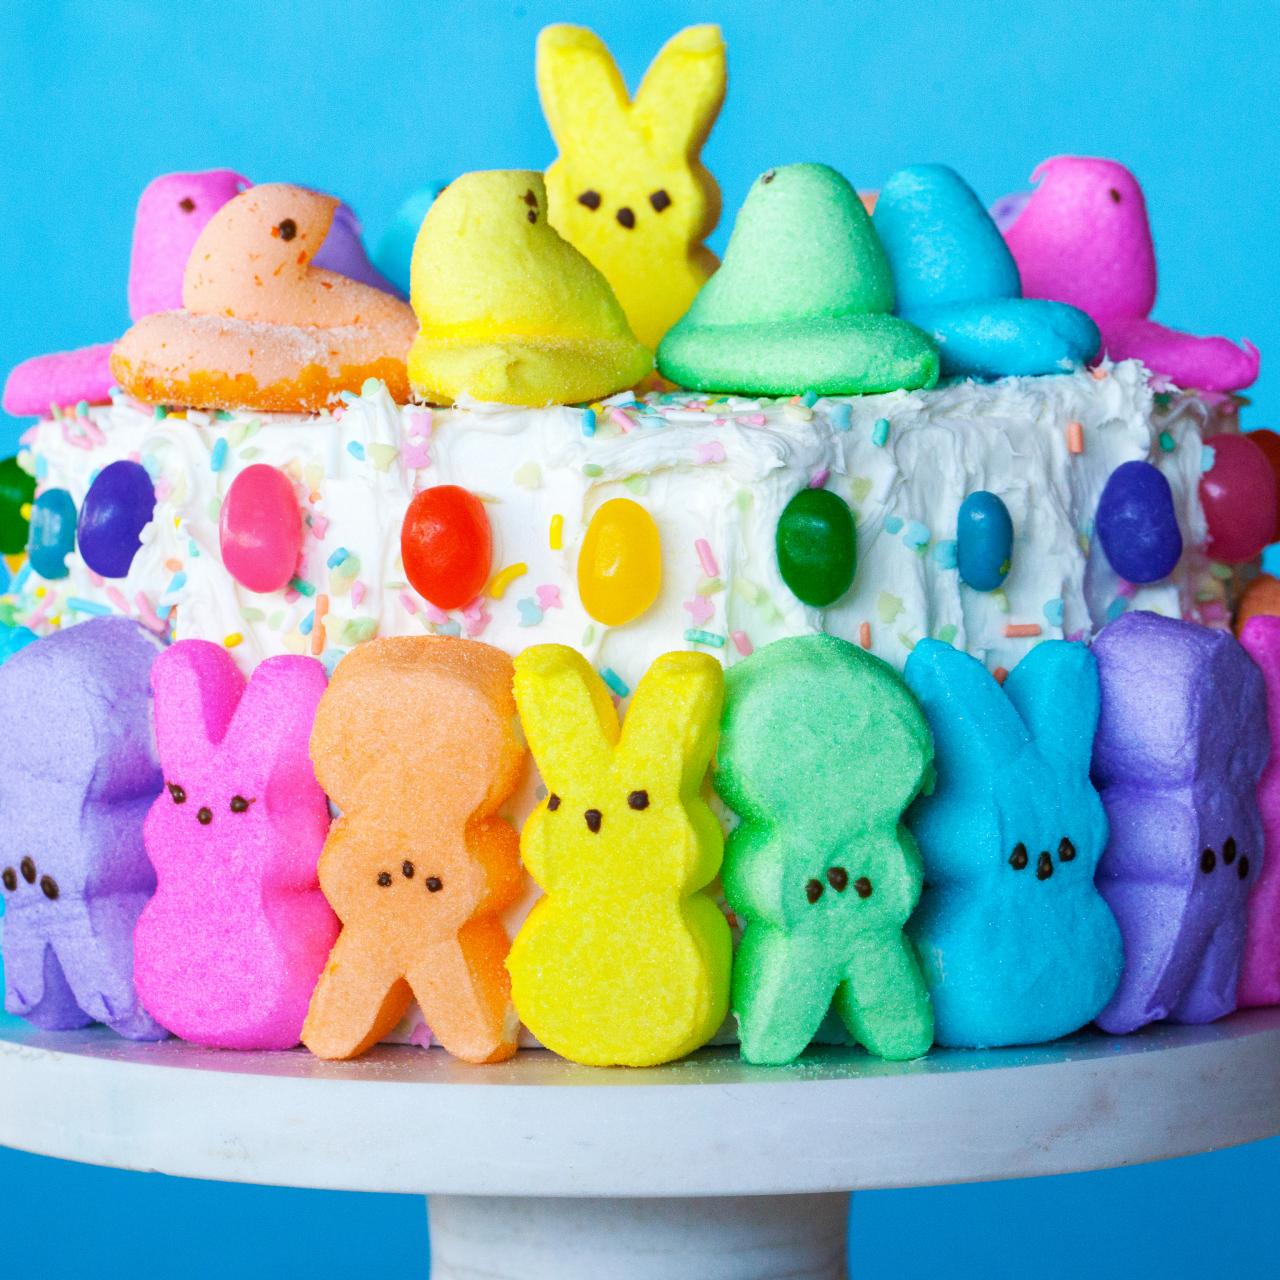 https://food.fnr.sndimg.com/content/dam/images/food/fullset/2015/3/26/0/FN_Peeps-Easter-Cake_s4x3.jpg.rend.hgtvcom.1280.1280.suffix/1427403718541.jpeg